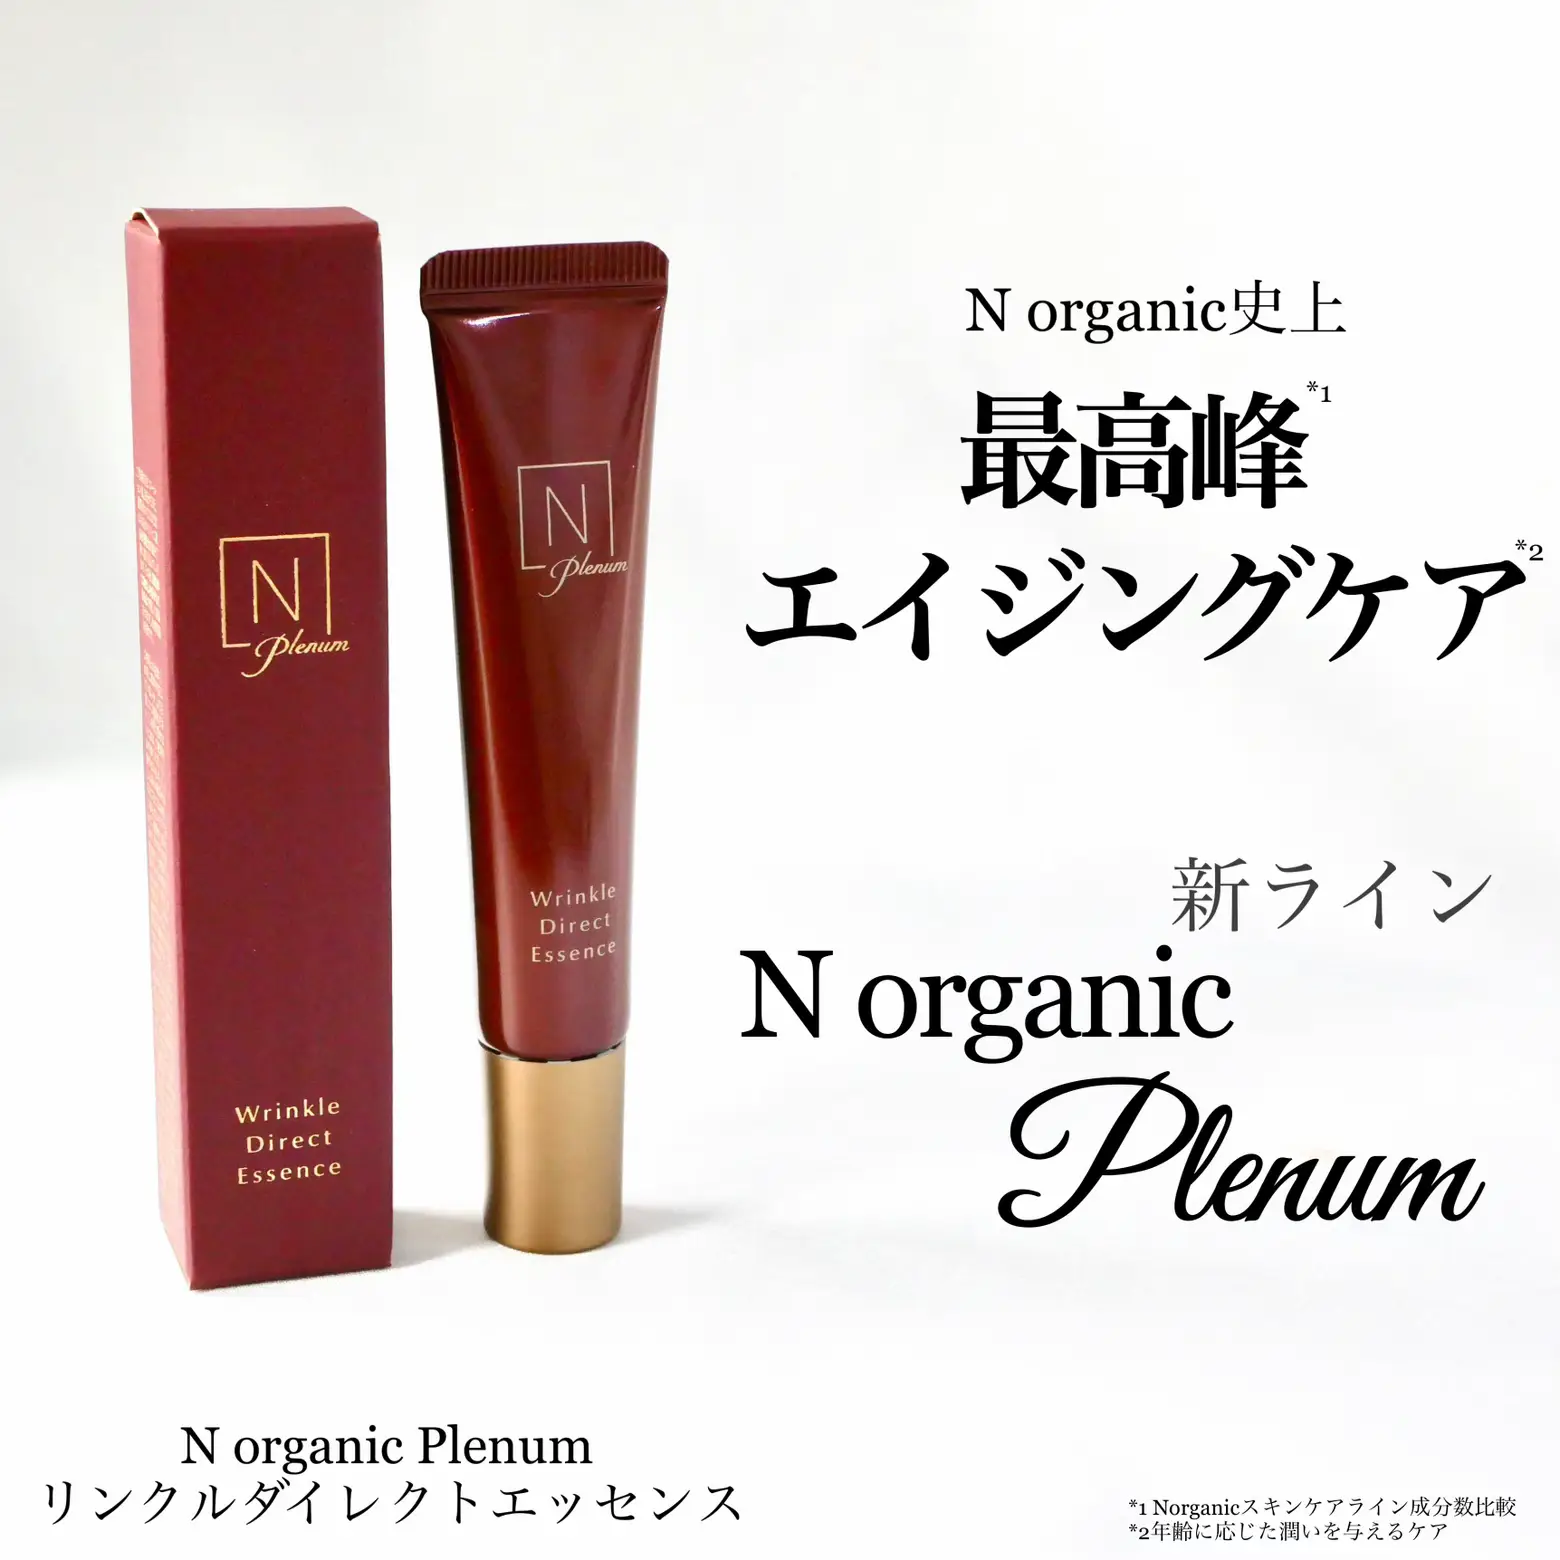 N organic Plenum debut / | Gallery posted by dome0724 | Lemon8